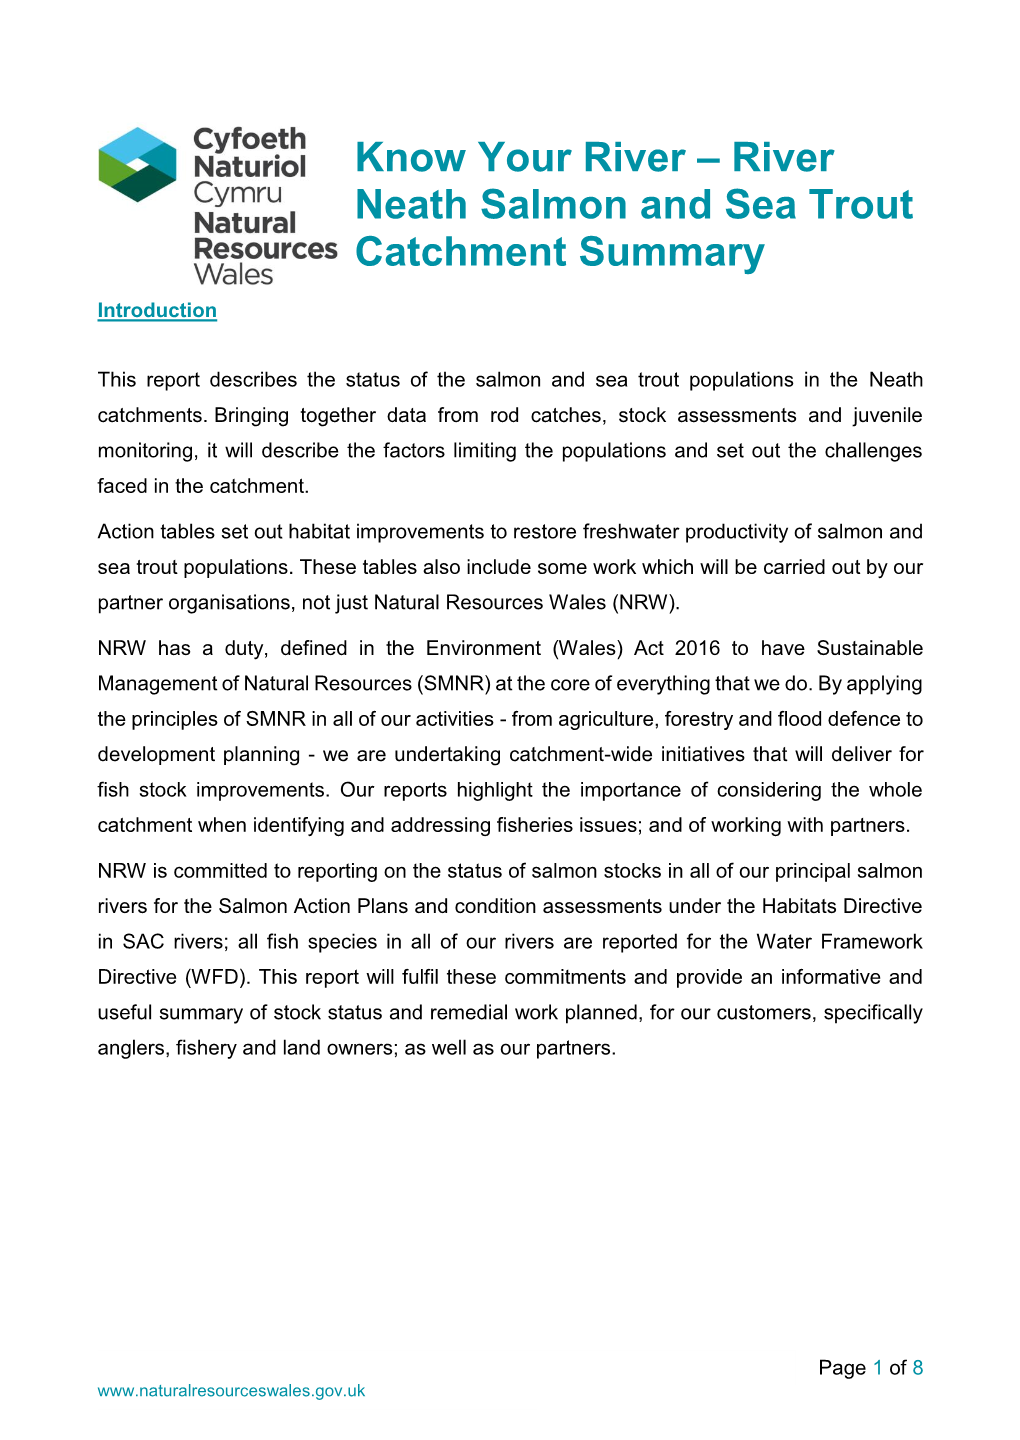 River Neath Salmon and Sea Trout Catchment Summary